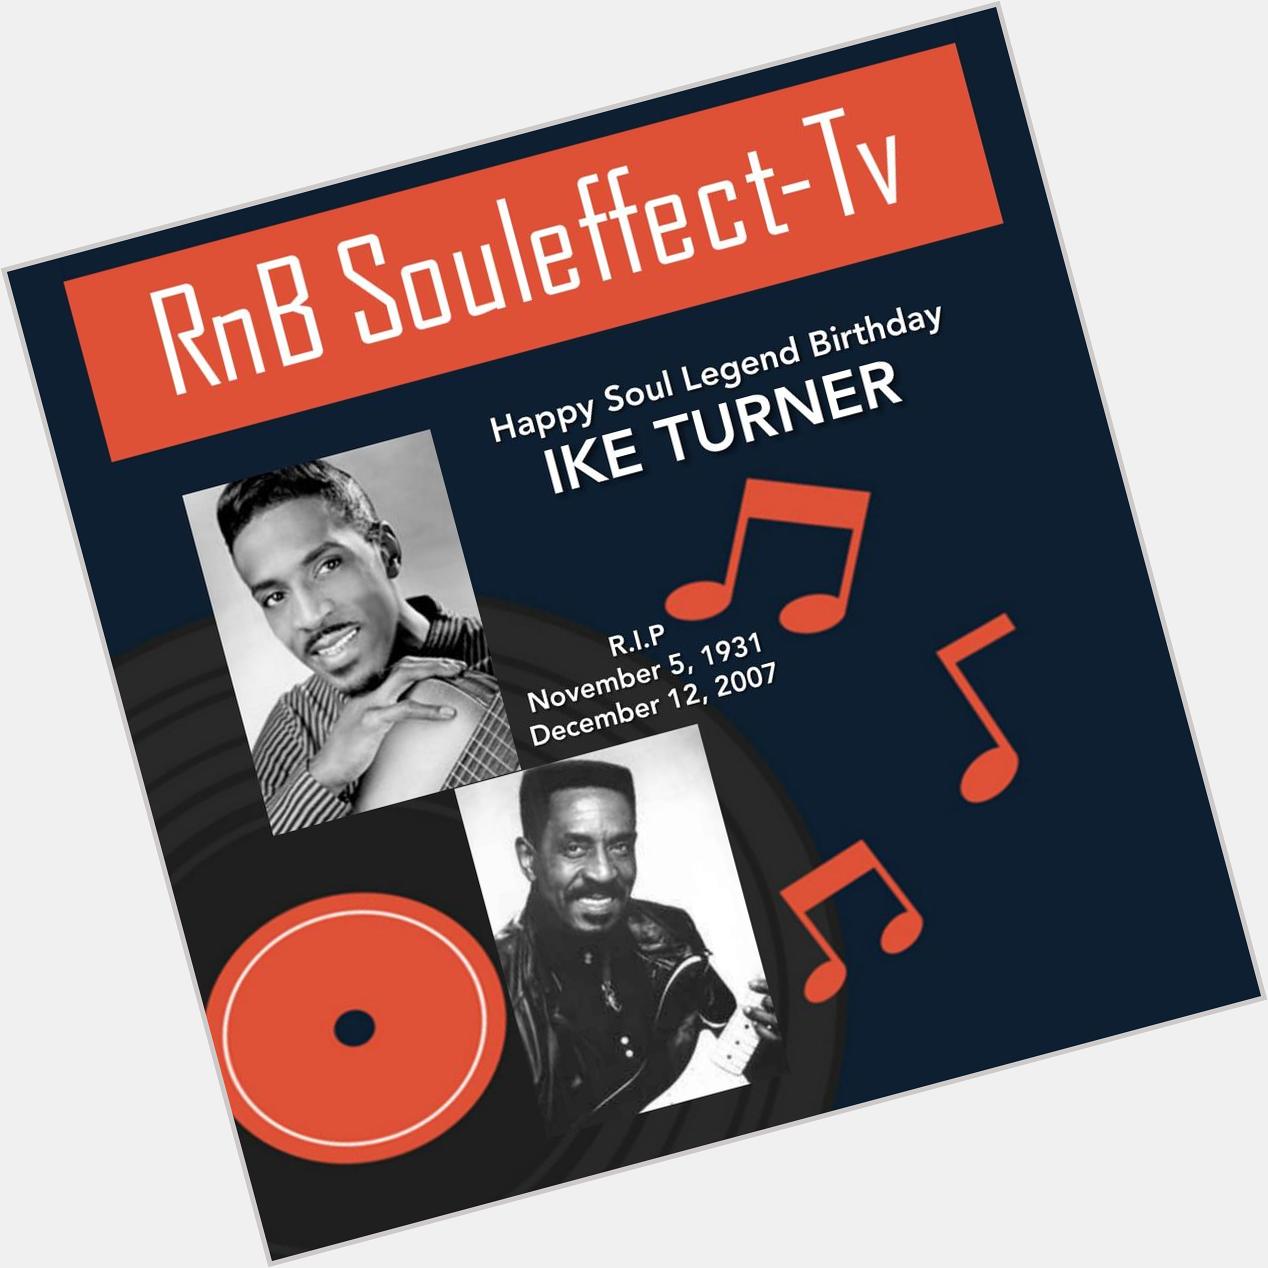 Happy Soul Legend Birthday Ike Turner       